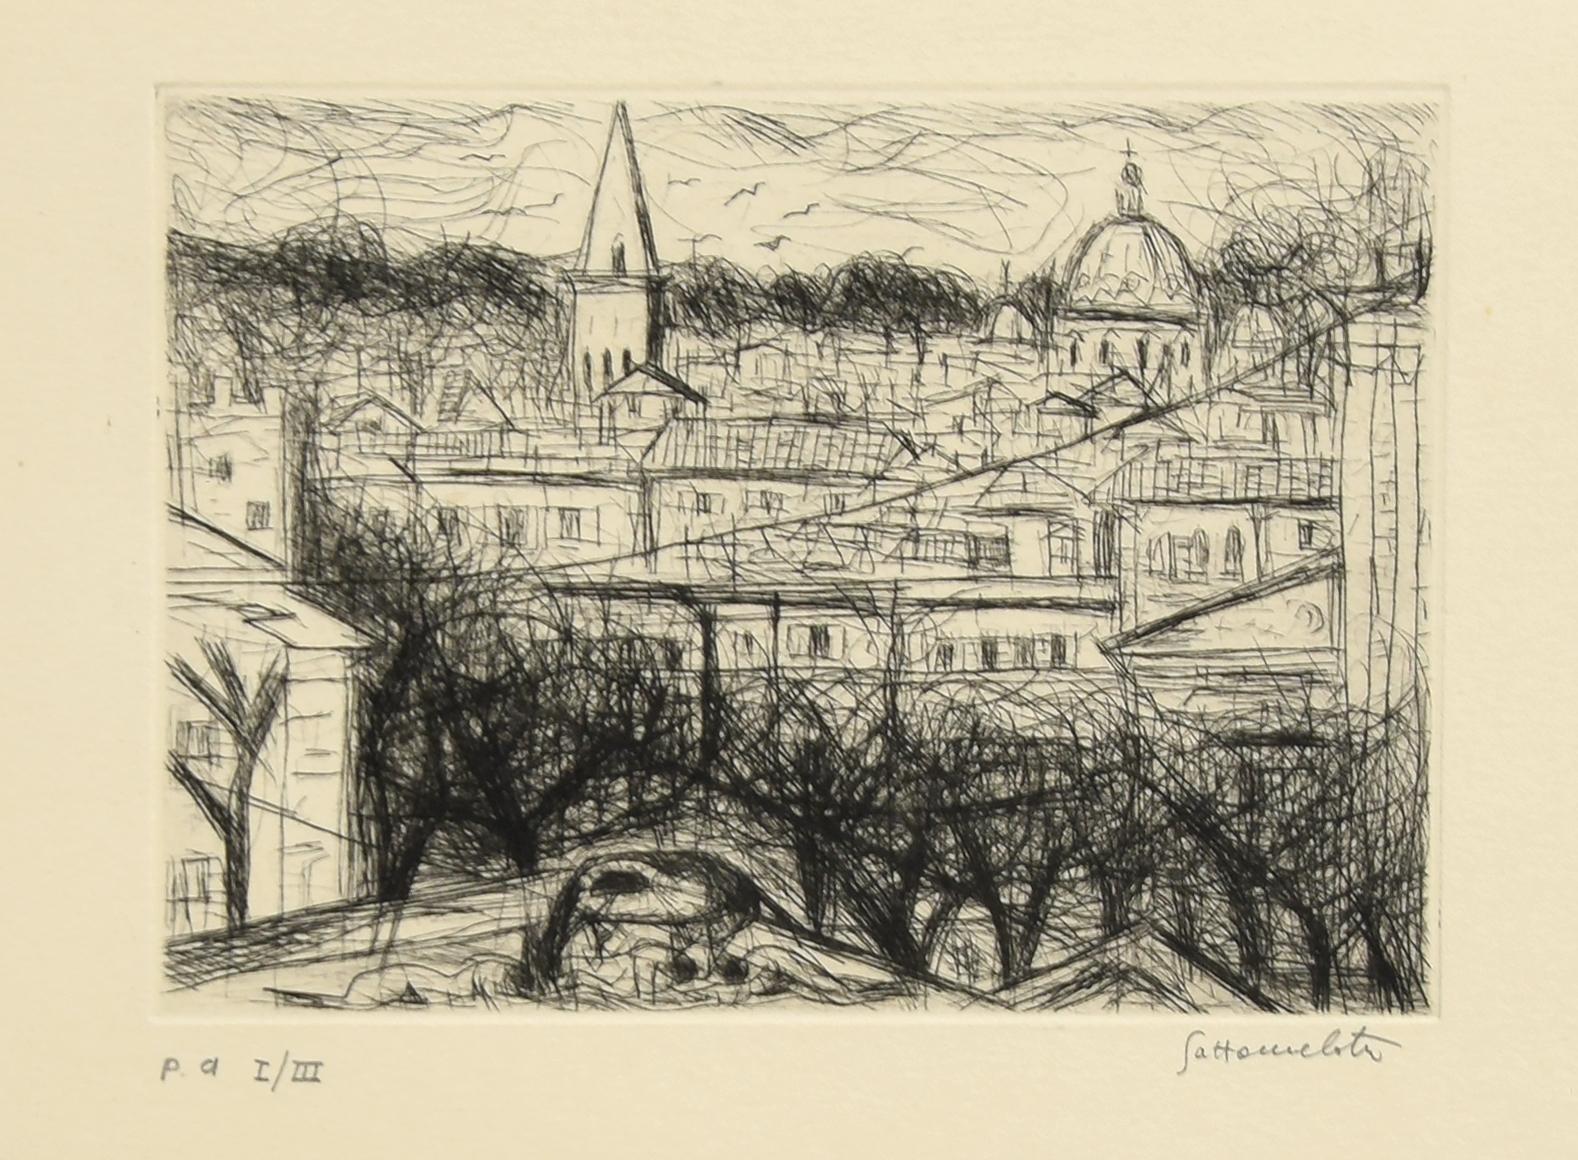 Nazareno Gattamenata Figurative Print - City View - Etching by N. Gattamelata - Late 20th Century